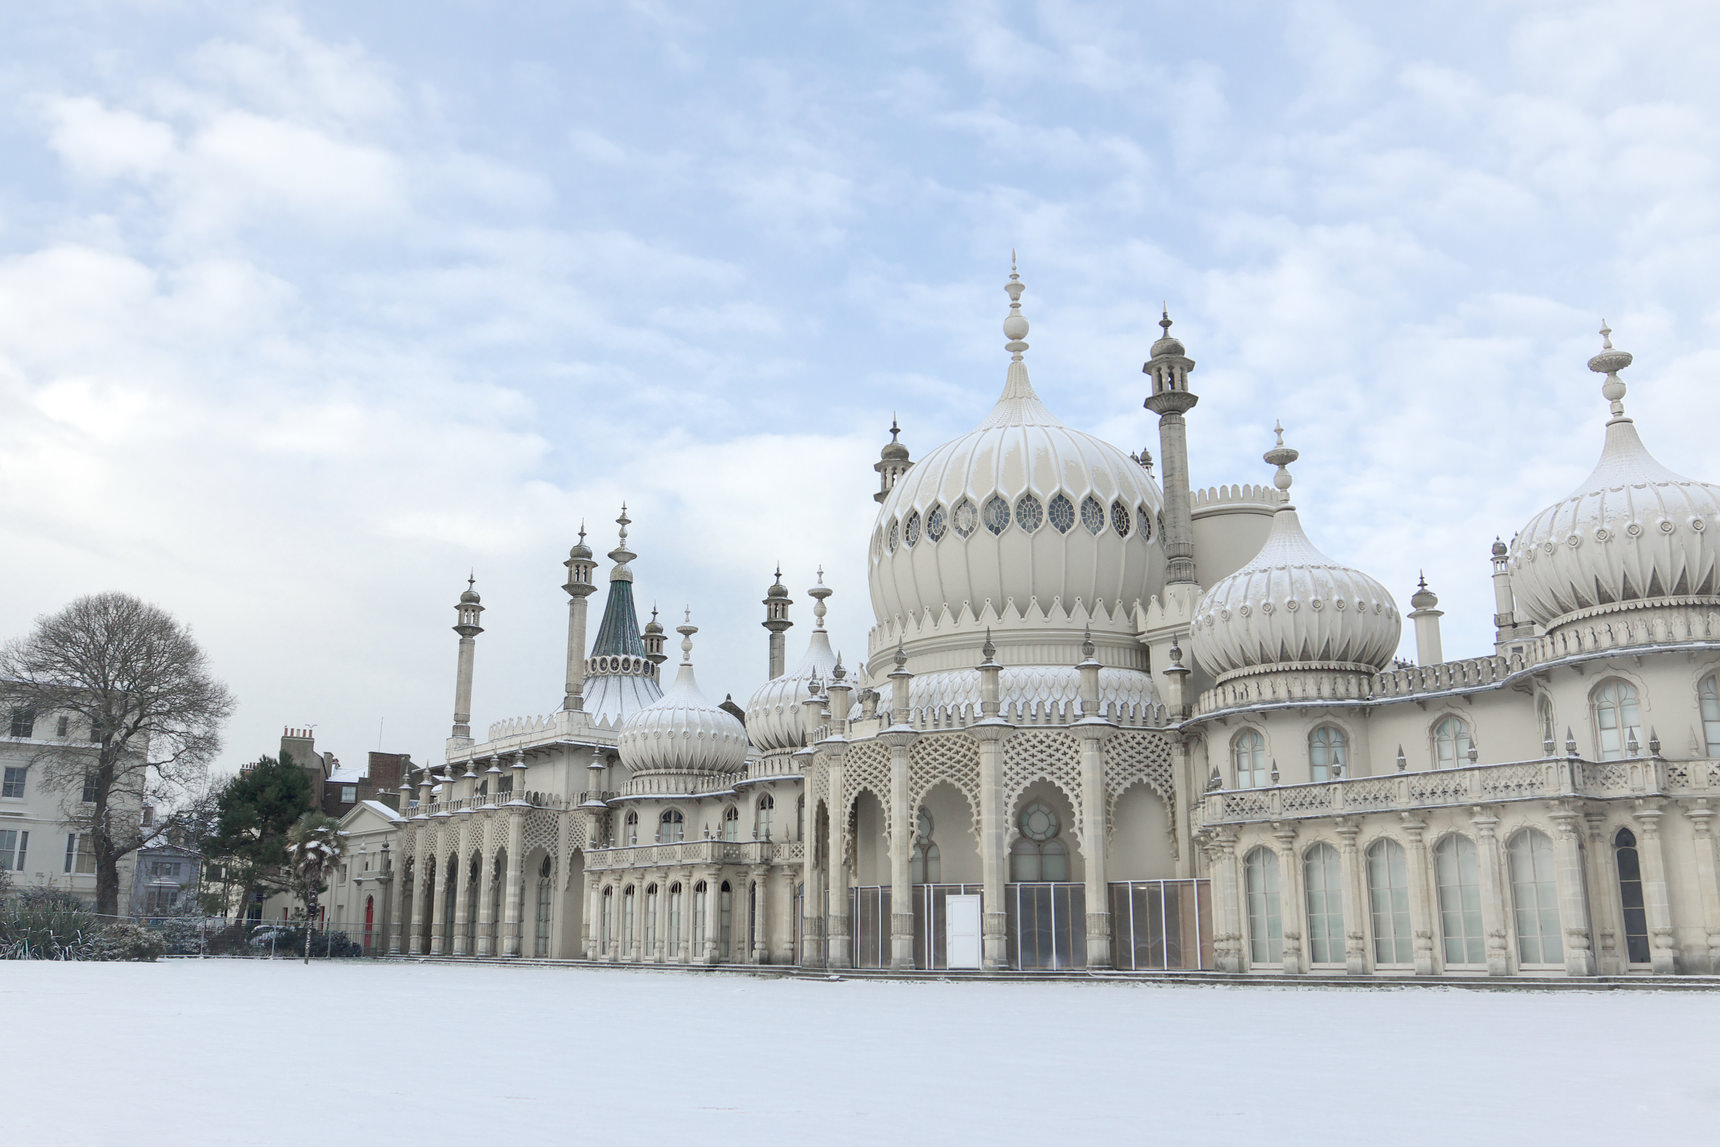 Brighton Pavilion in the snow